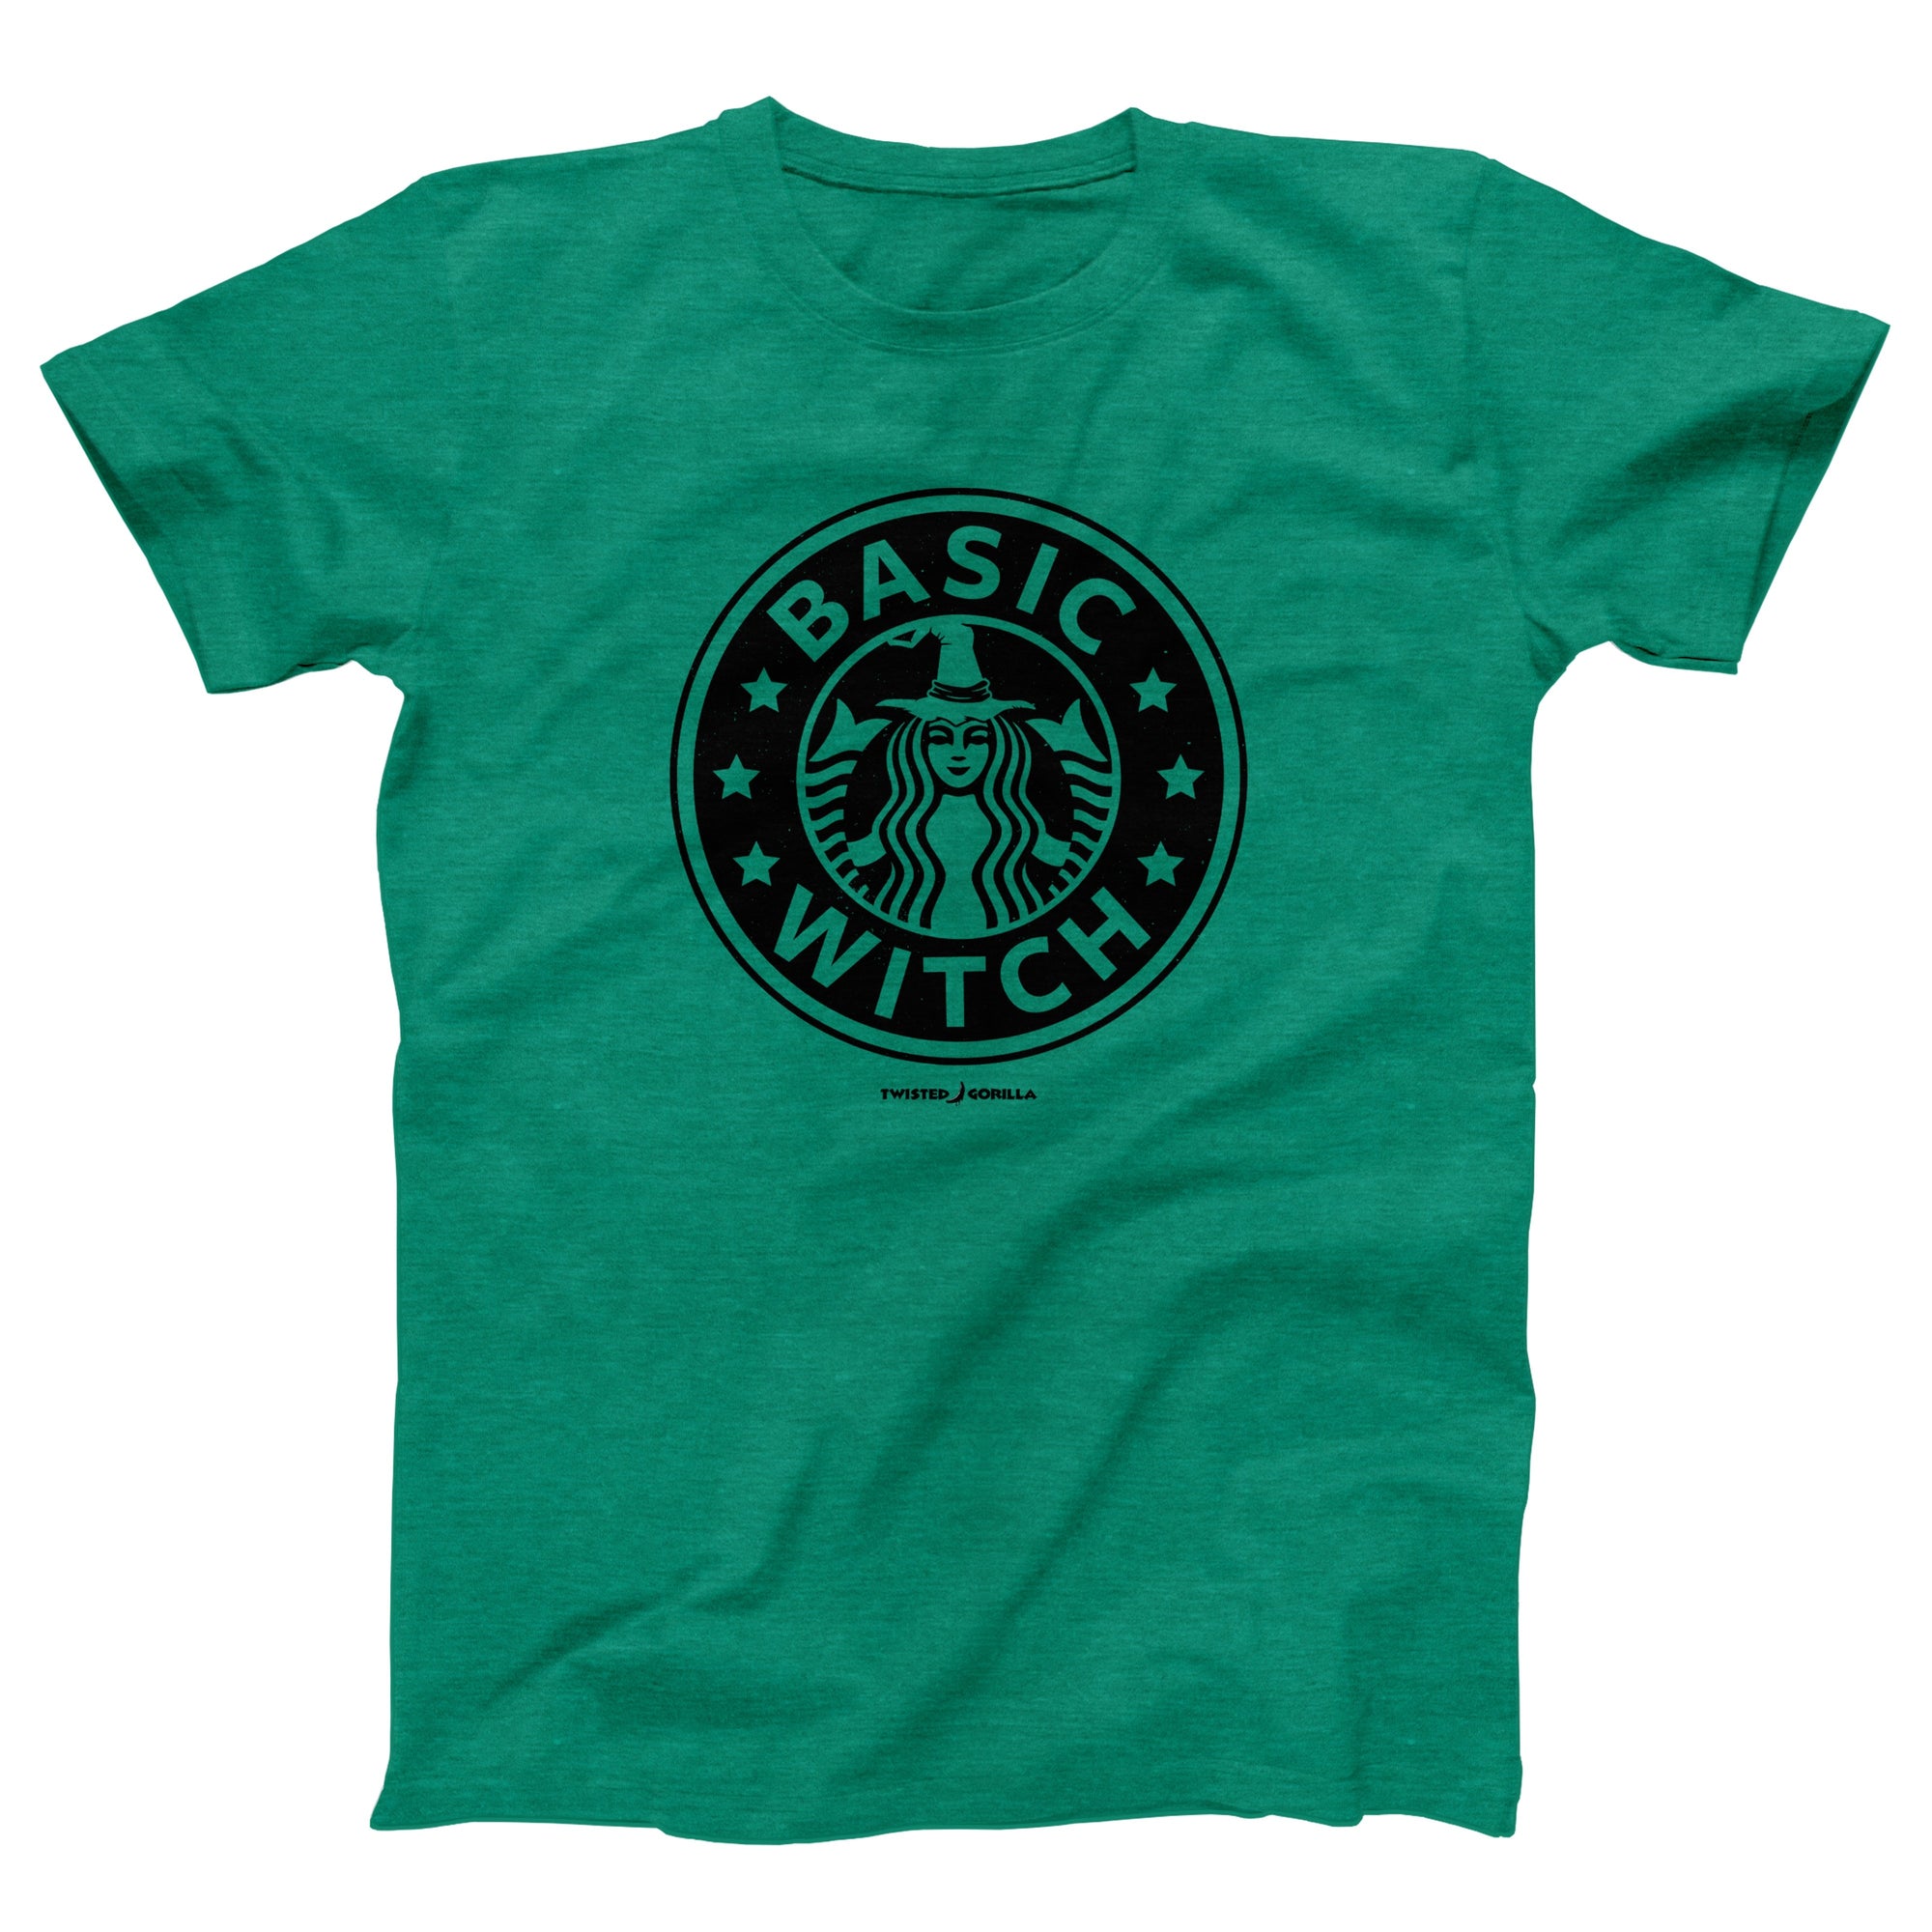 Seattle's Best Basic Witch Adult Unisex T-Shirt - anishphilip